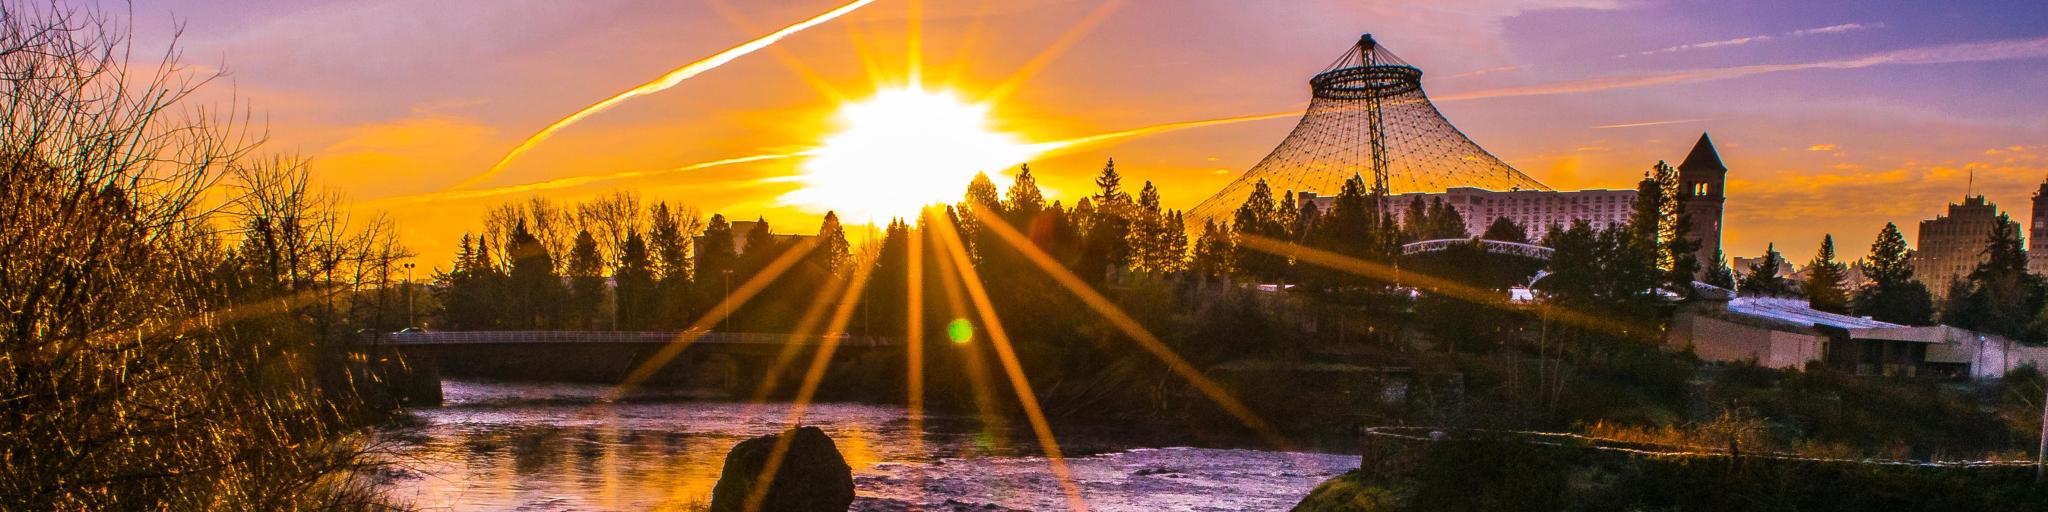 Orange sunrise over the river and trees in Spokane